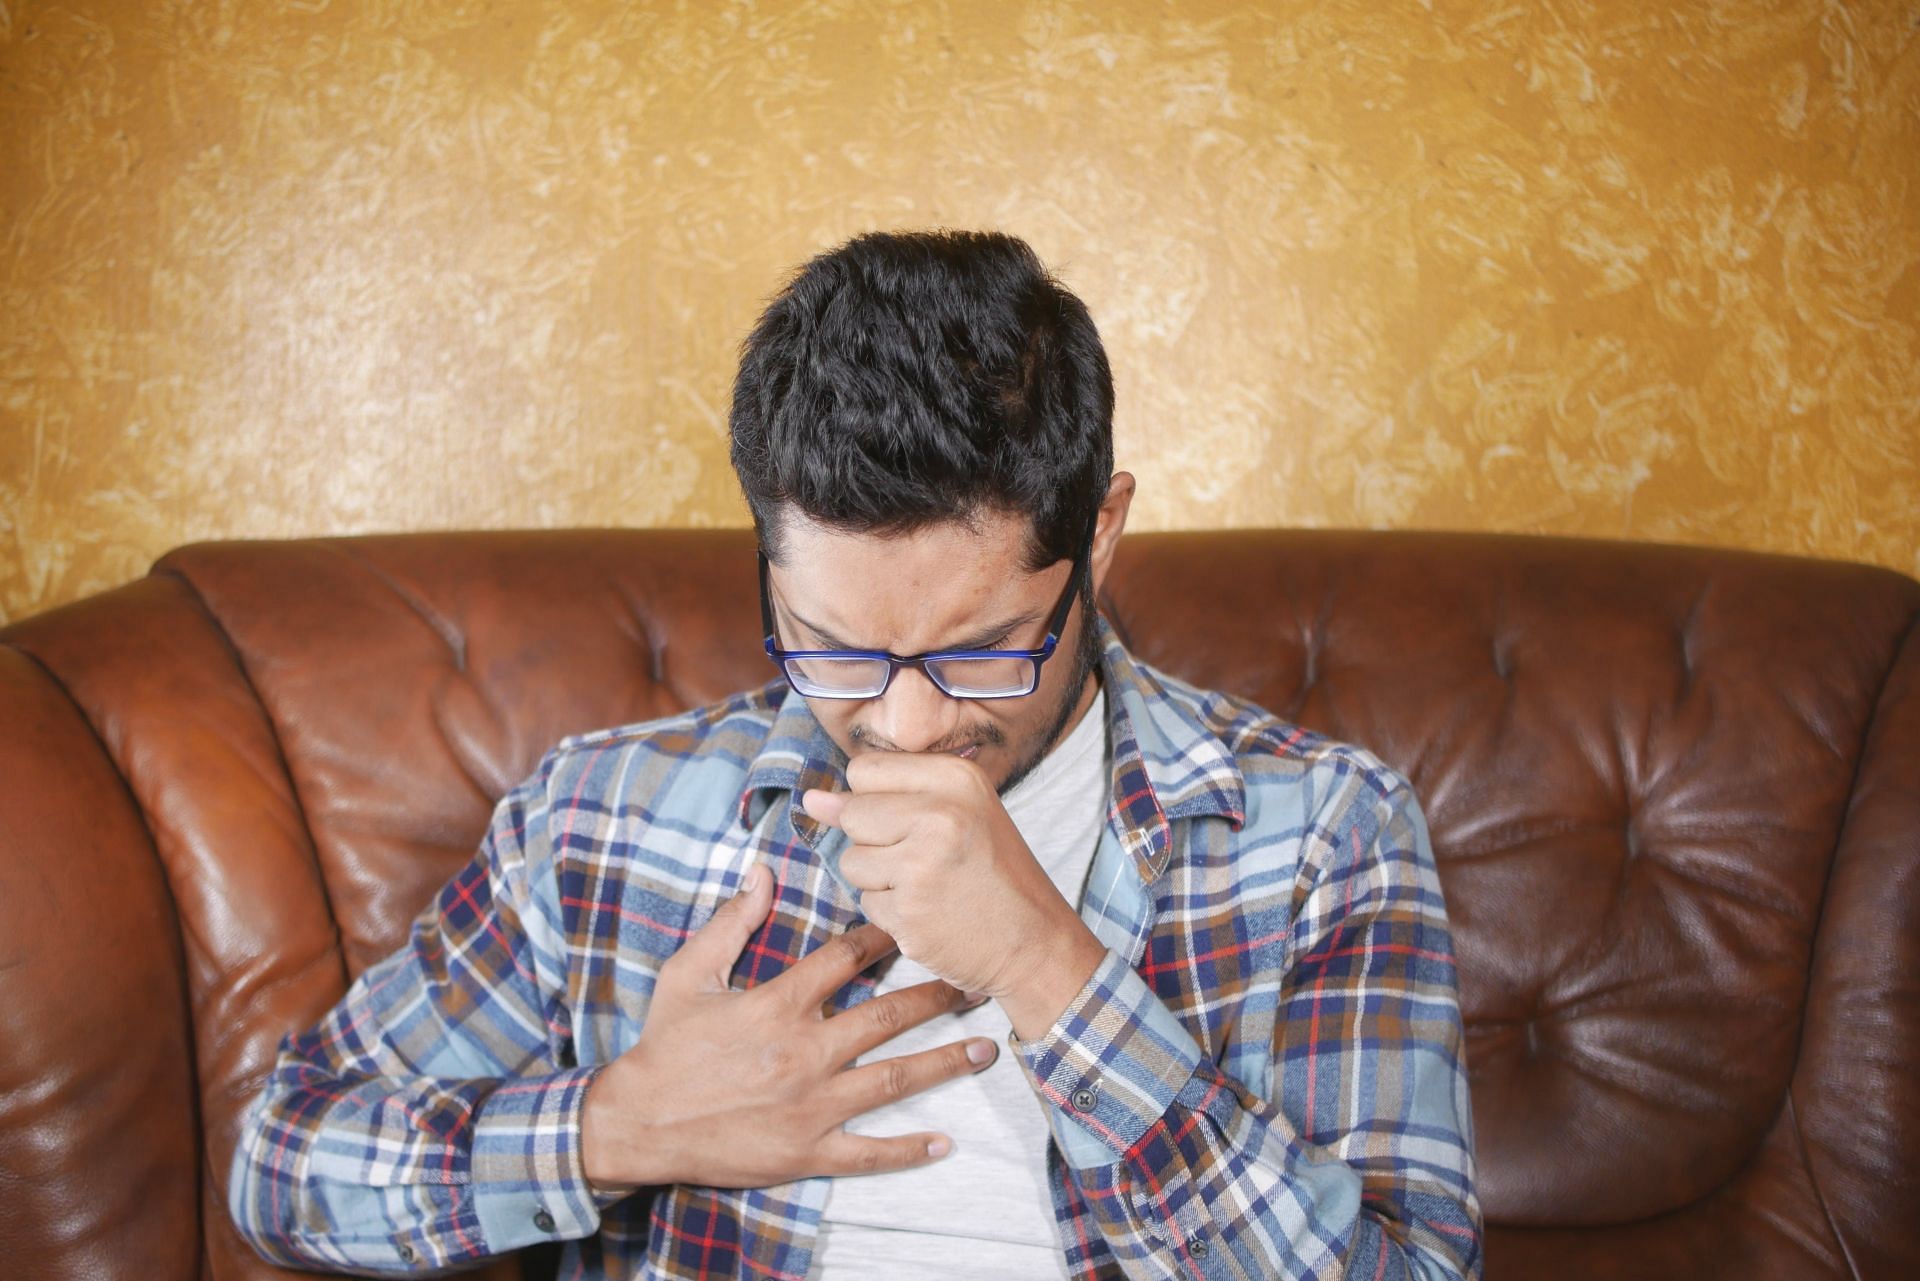 Coughing is the common symptom of TB. (Image via Pexels/ Towfiqu Barbhuiya)